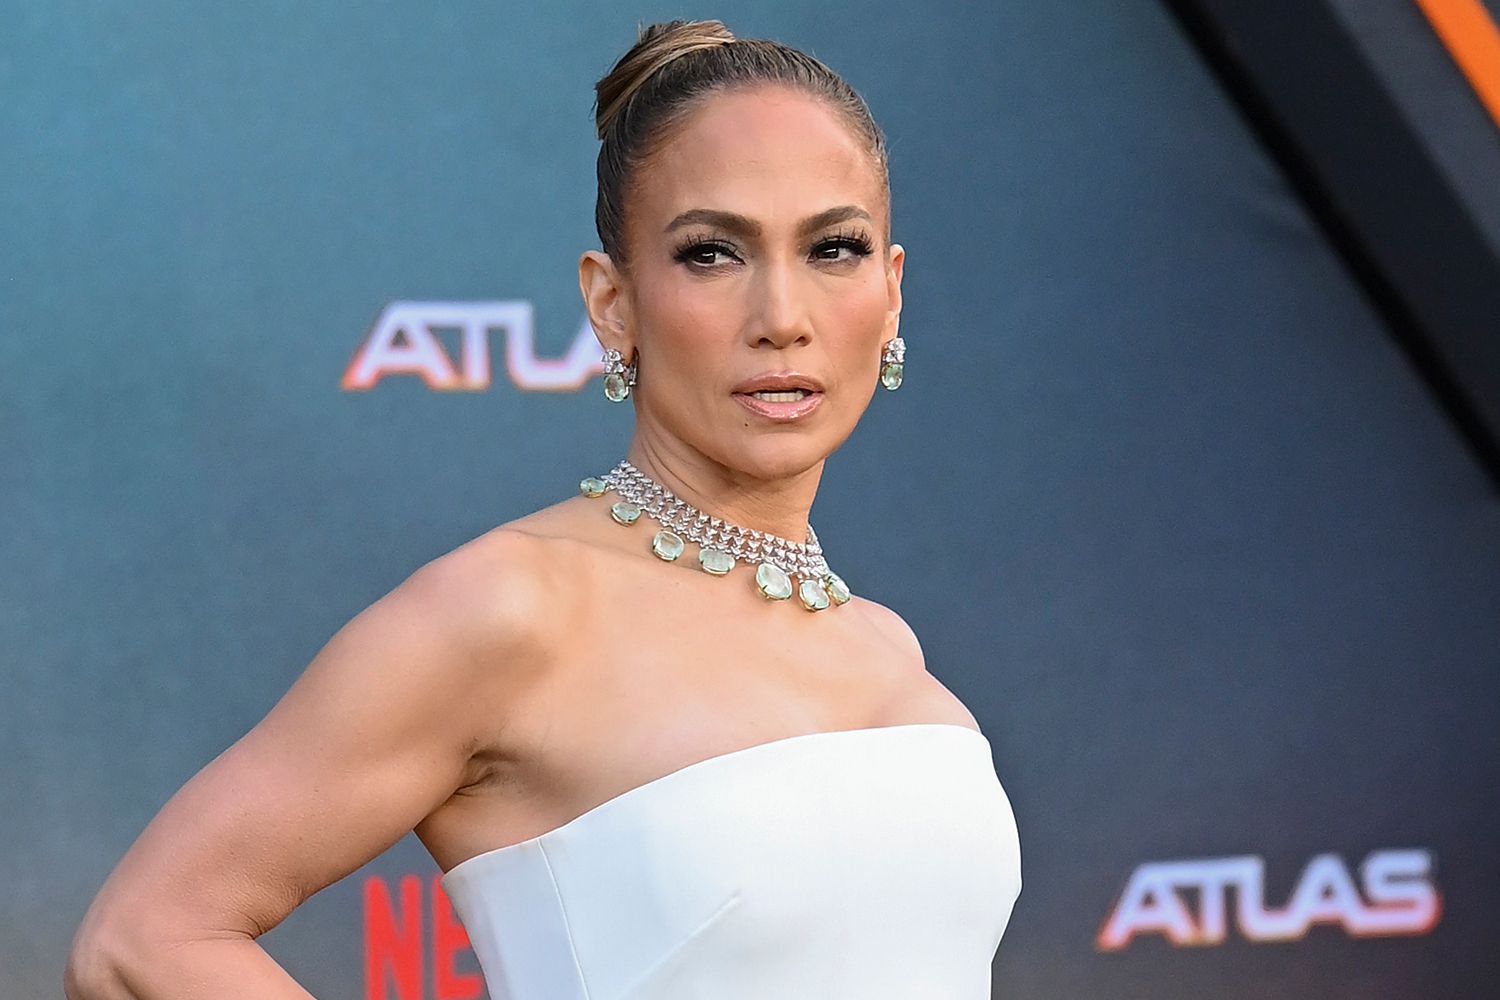 Jennifer Lopez Attended The ‘Atlas’ Premiere Without Ben Affleck